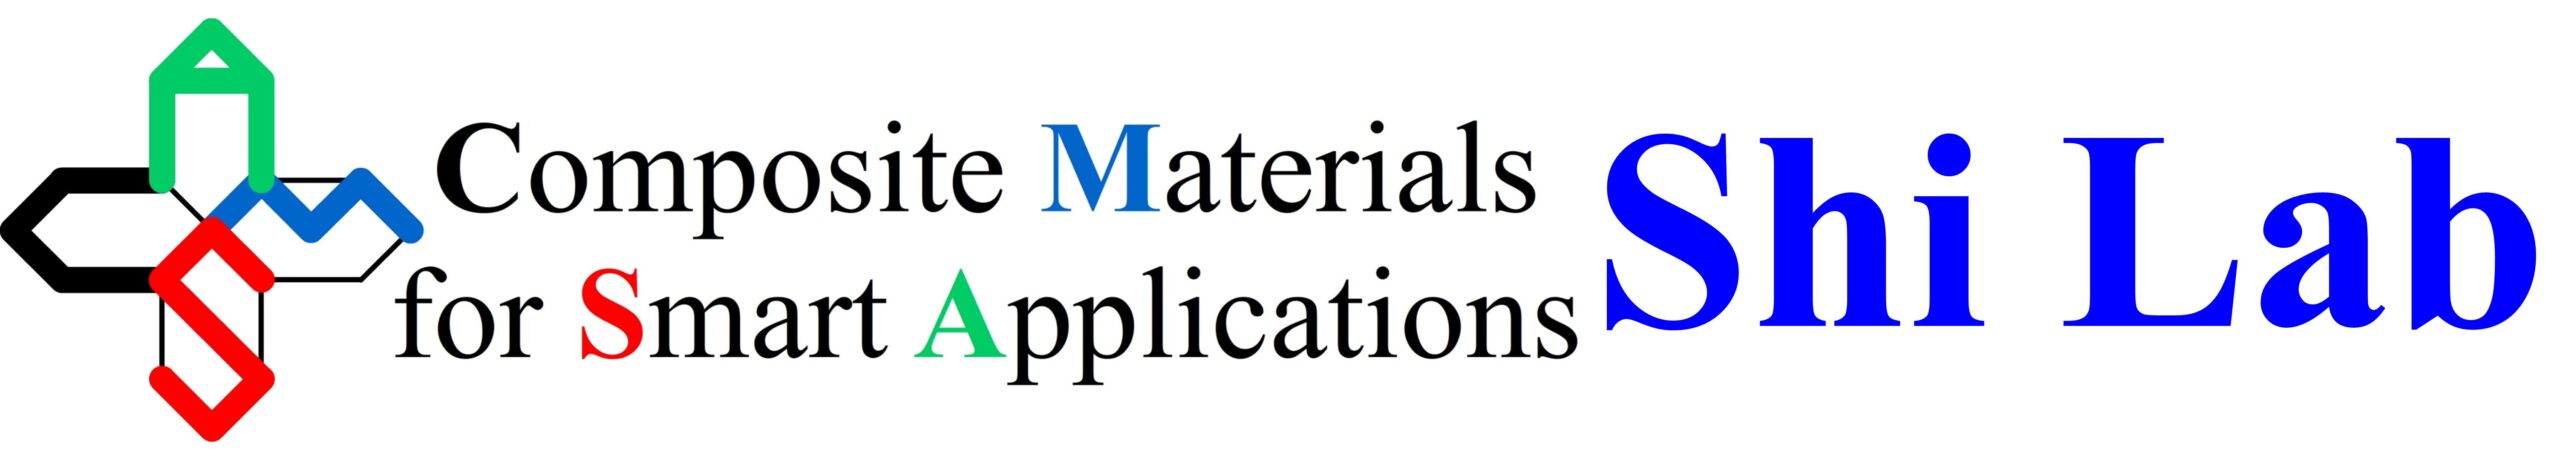 Composite Materials for Smart Applications